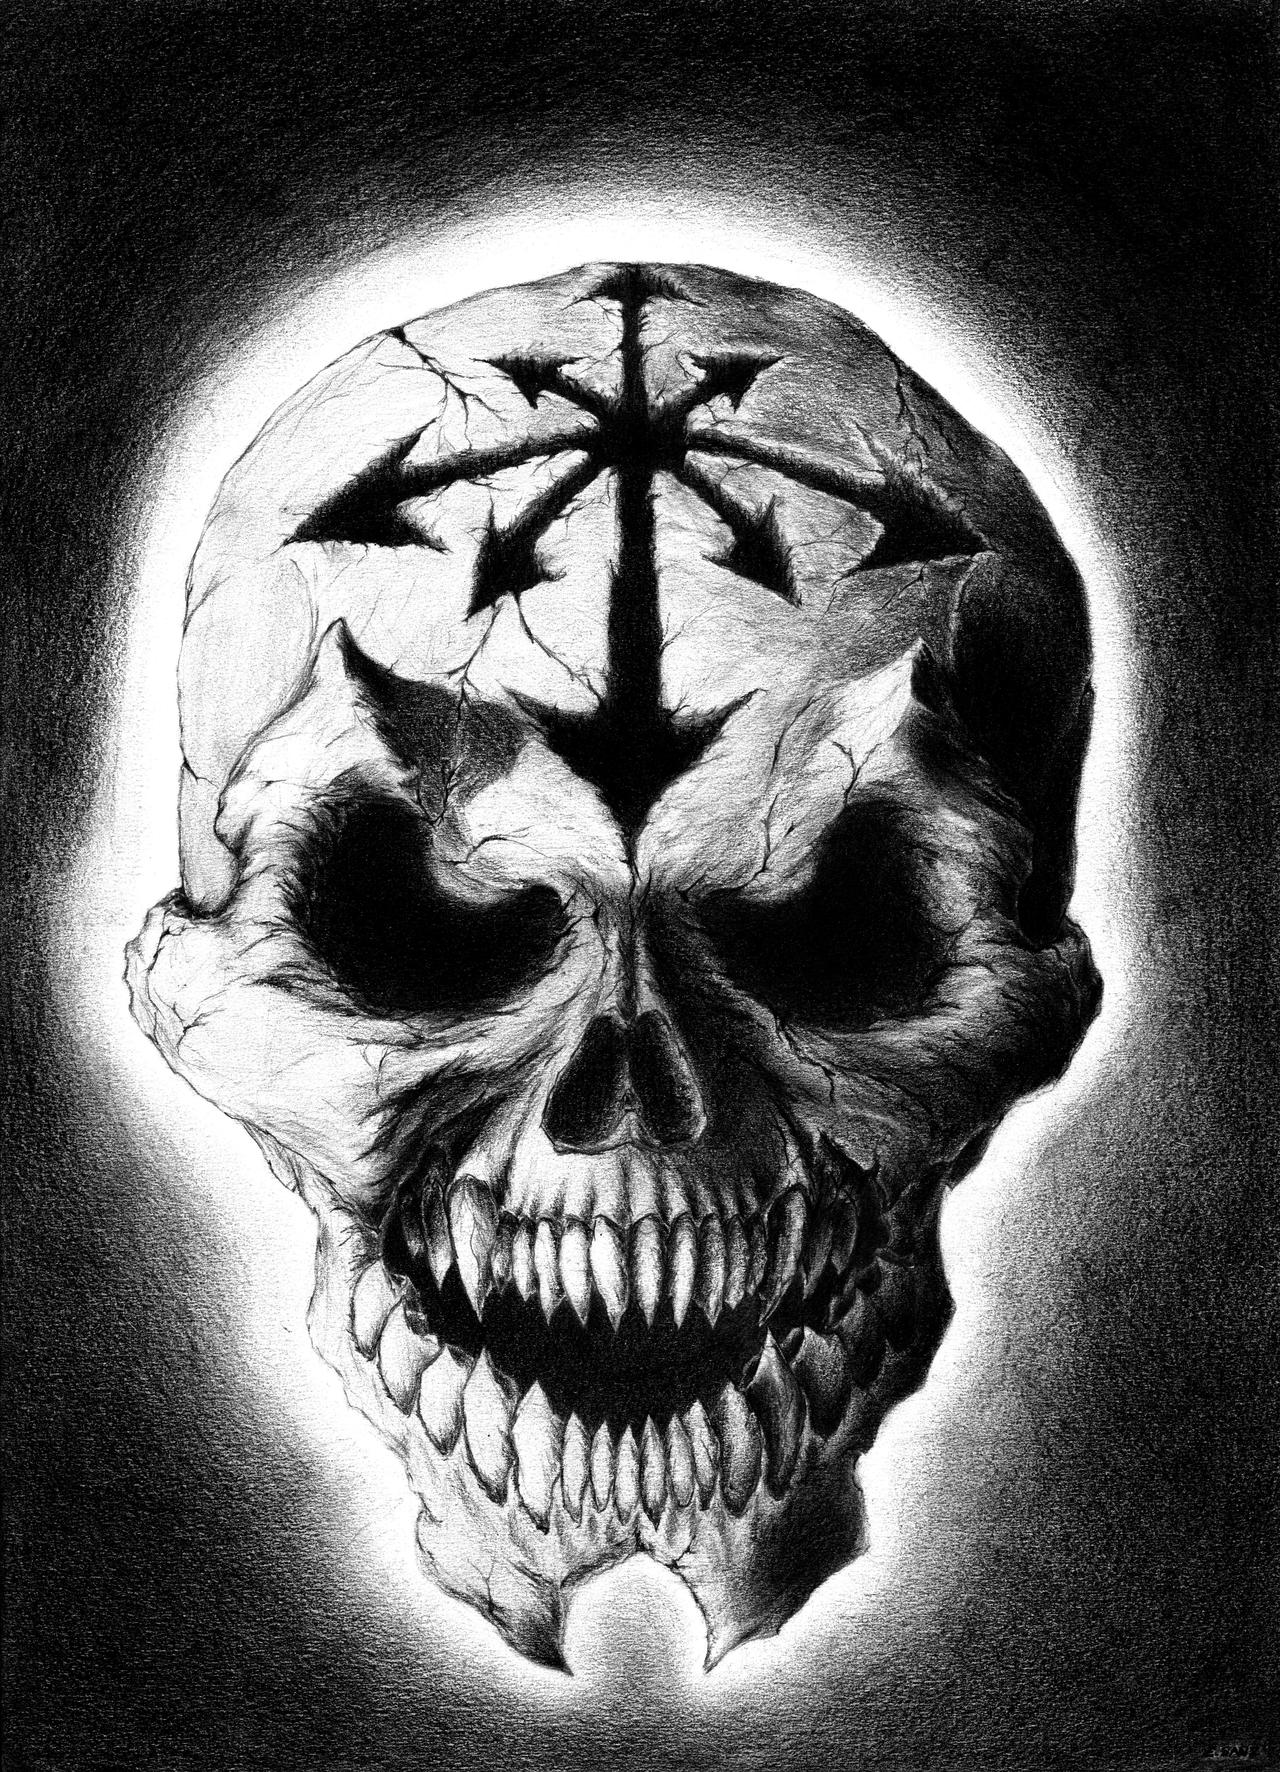 Chaos skull by kutxo on DeviantArt